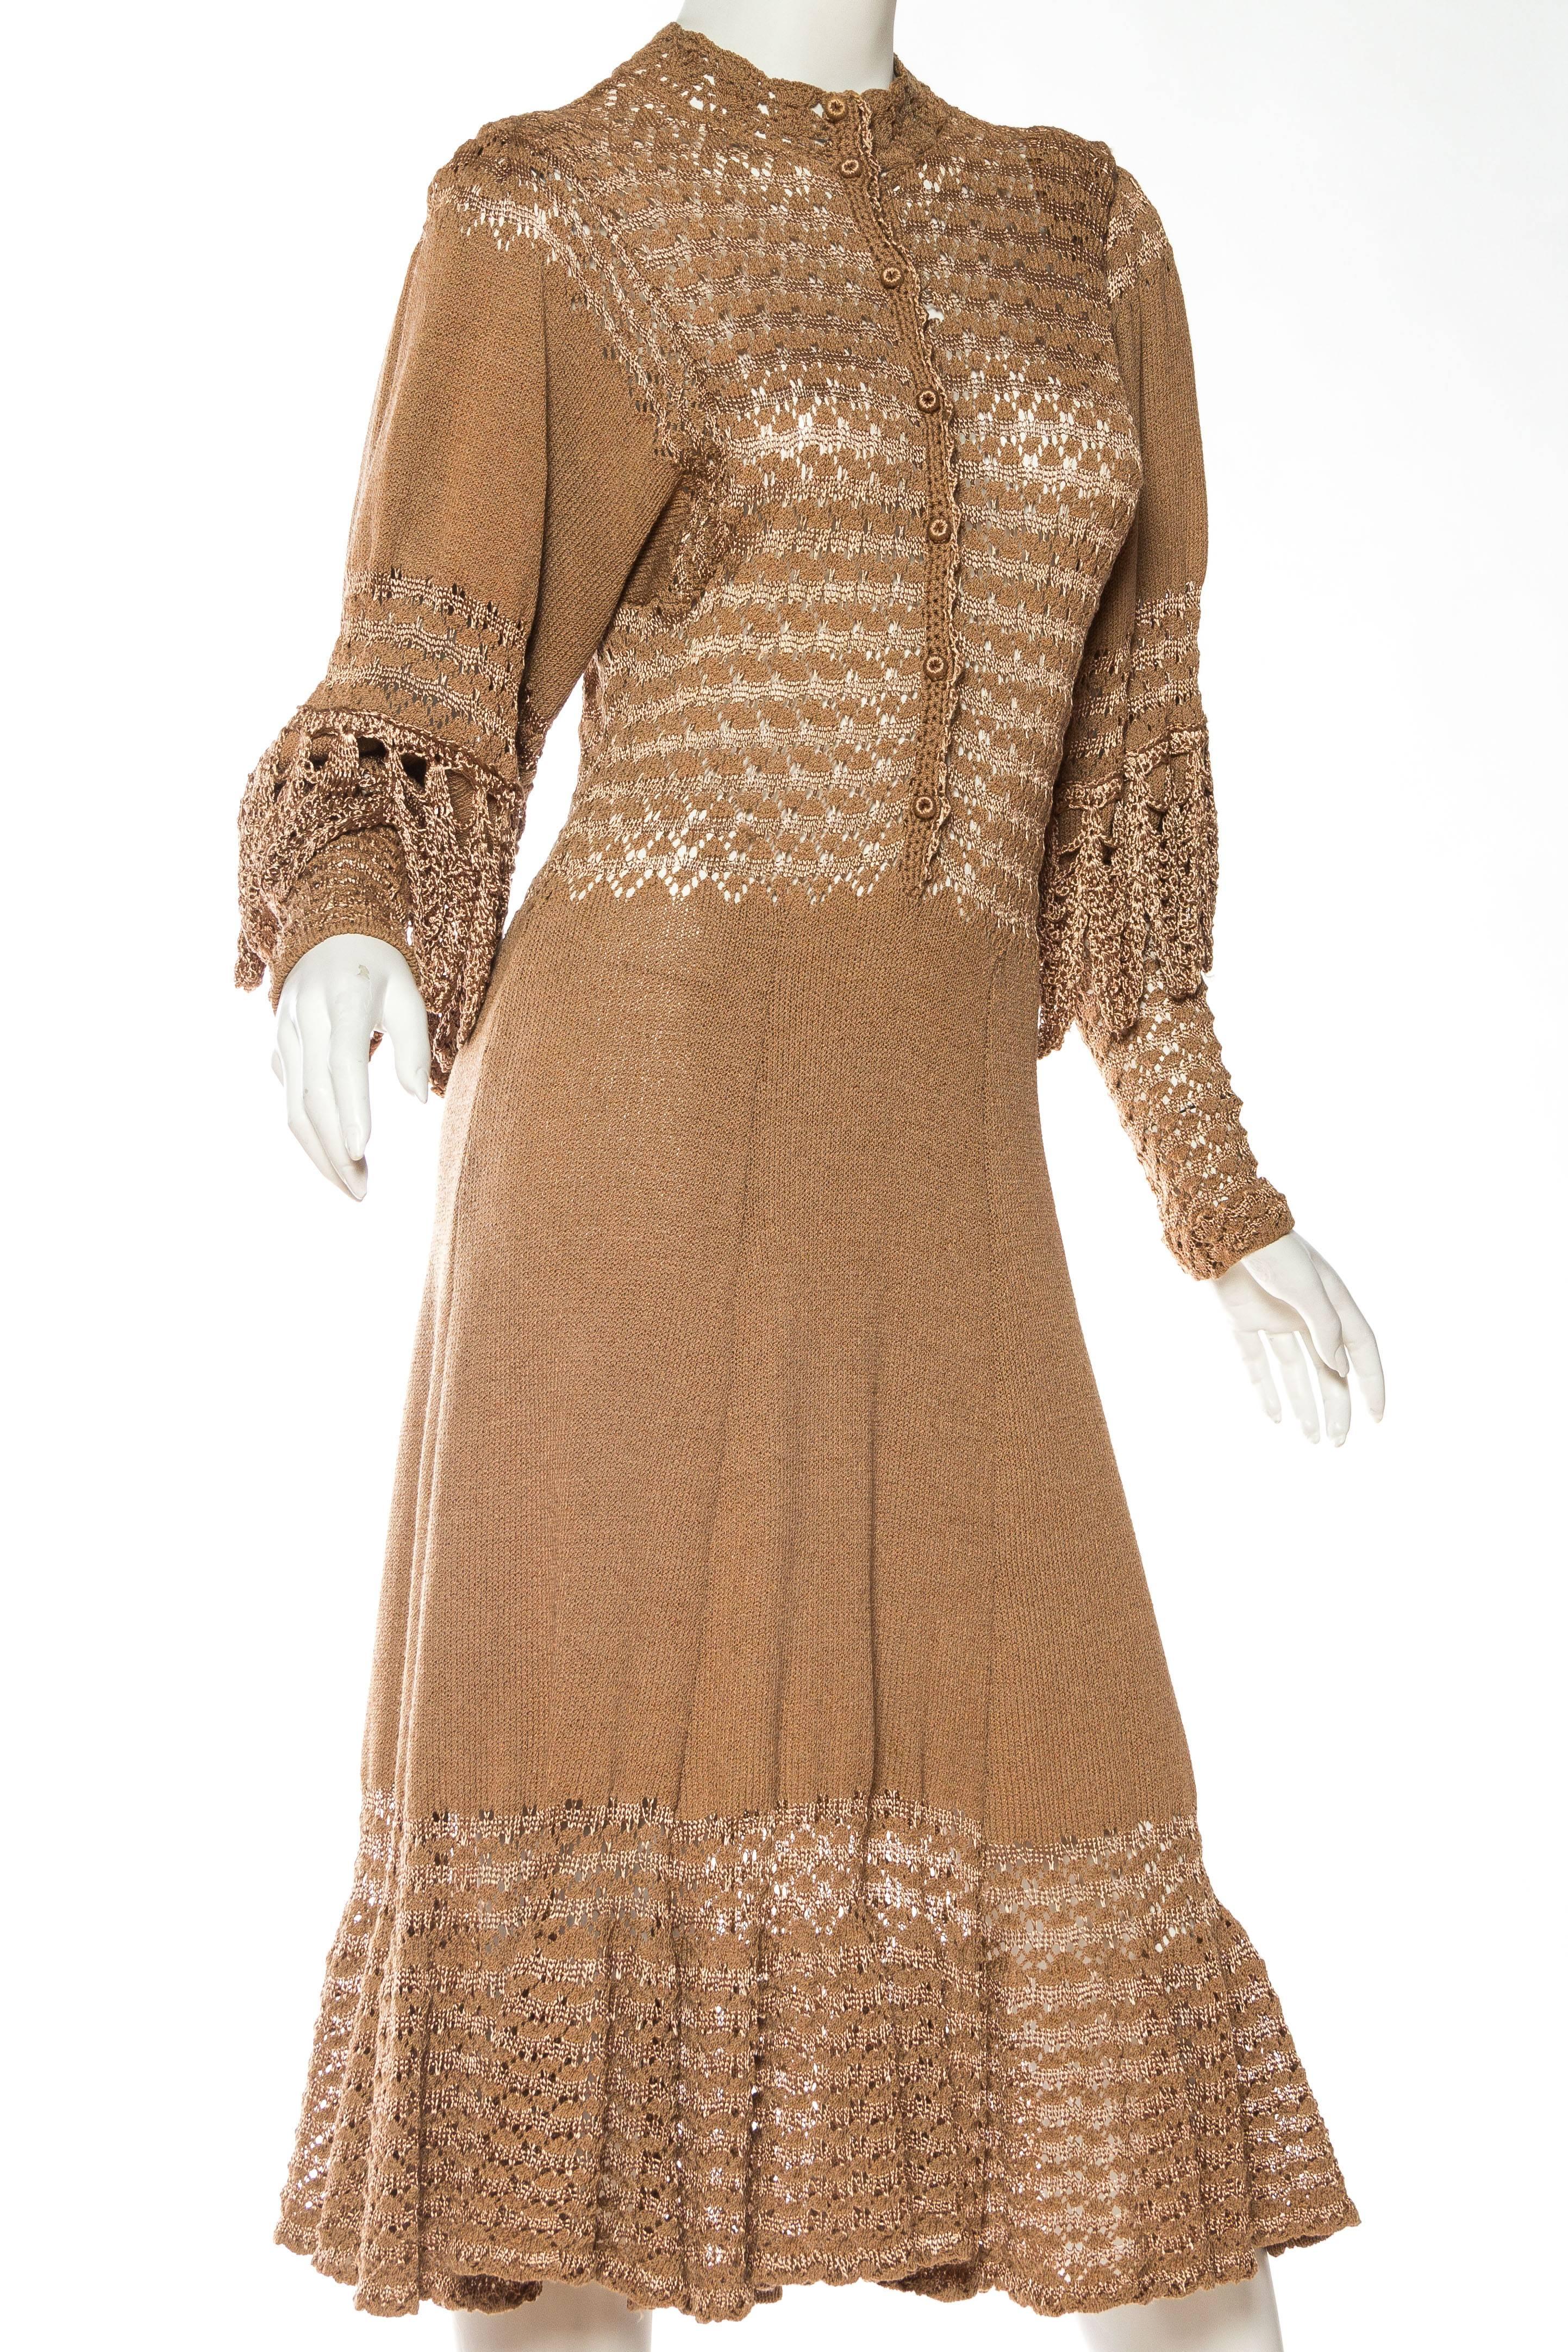 Women's 1970s Victorian Revival Knit Dress